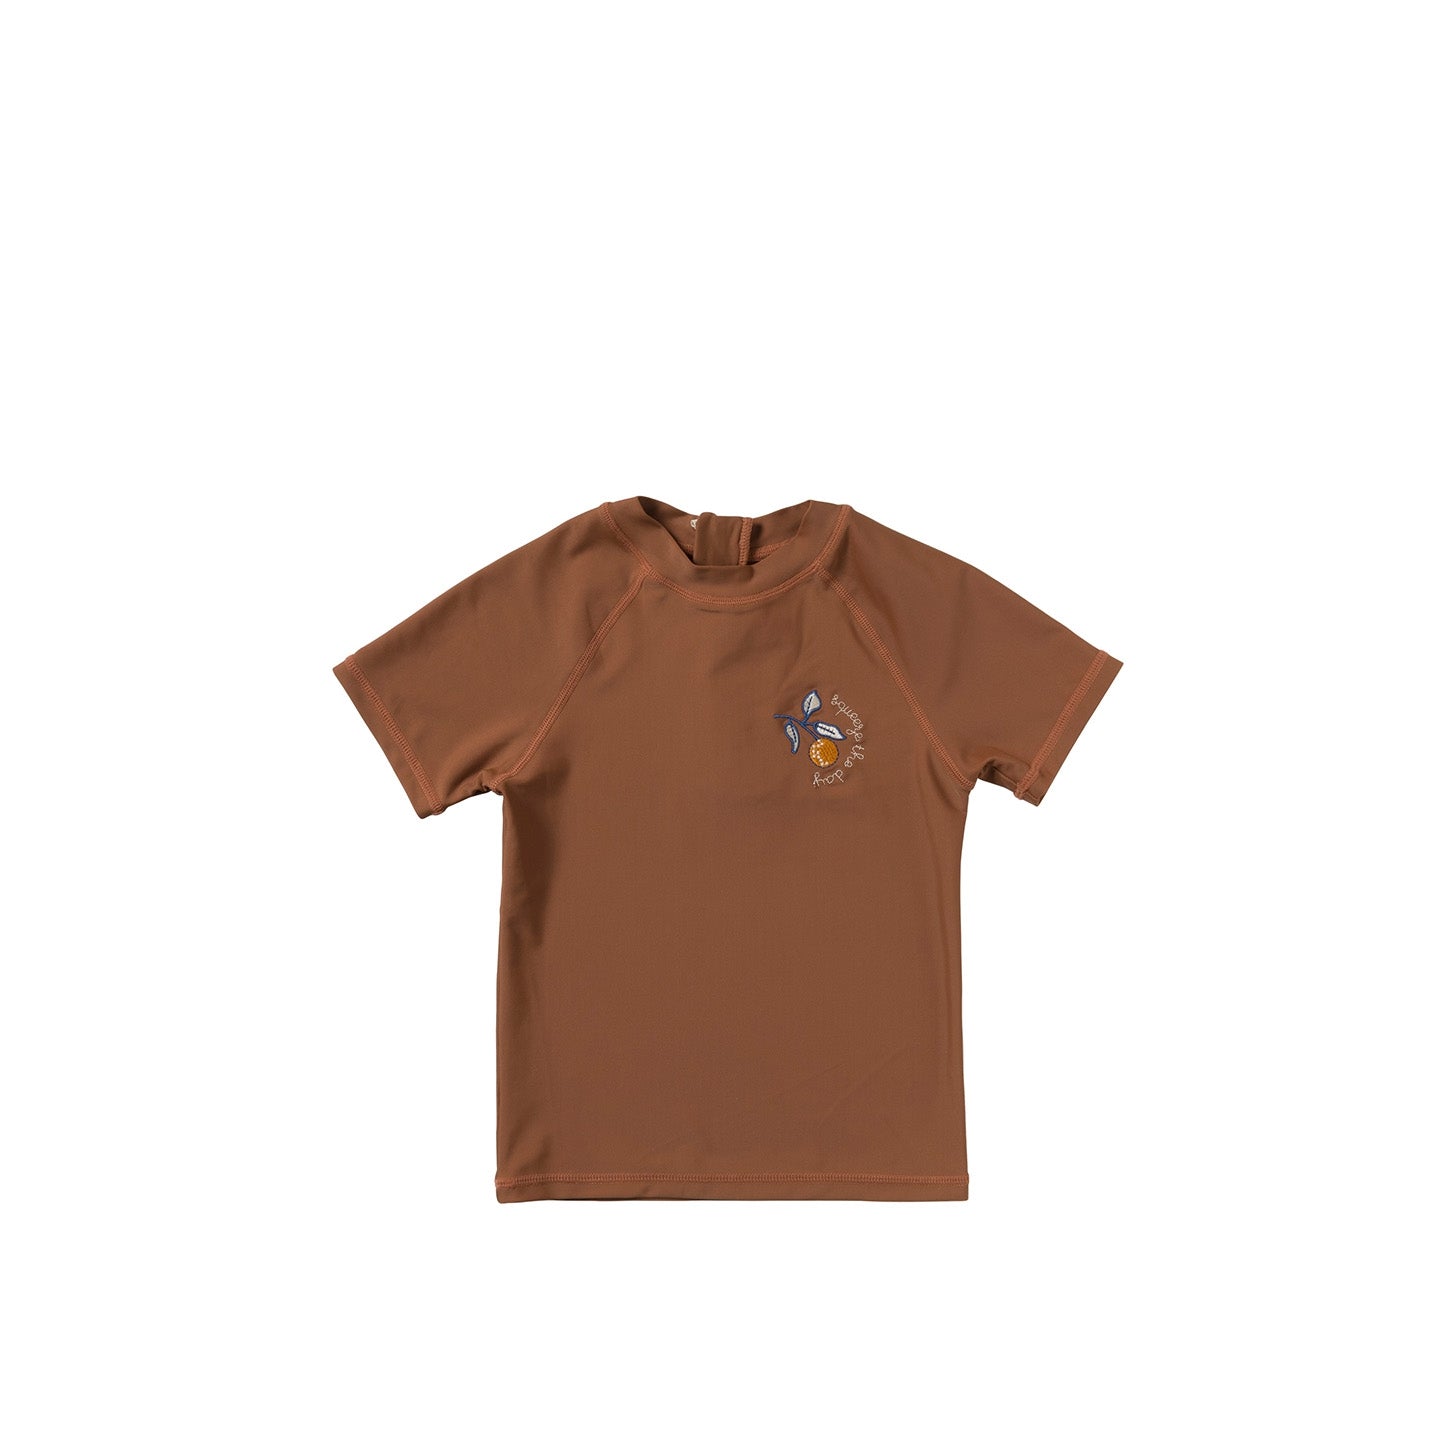 Unisexs UV Shirt Short Sleeves Solid | Sven van Salted Stories in de kleur Carob Brown in maat 122-128.